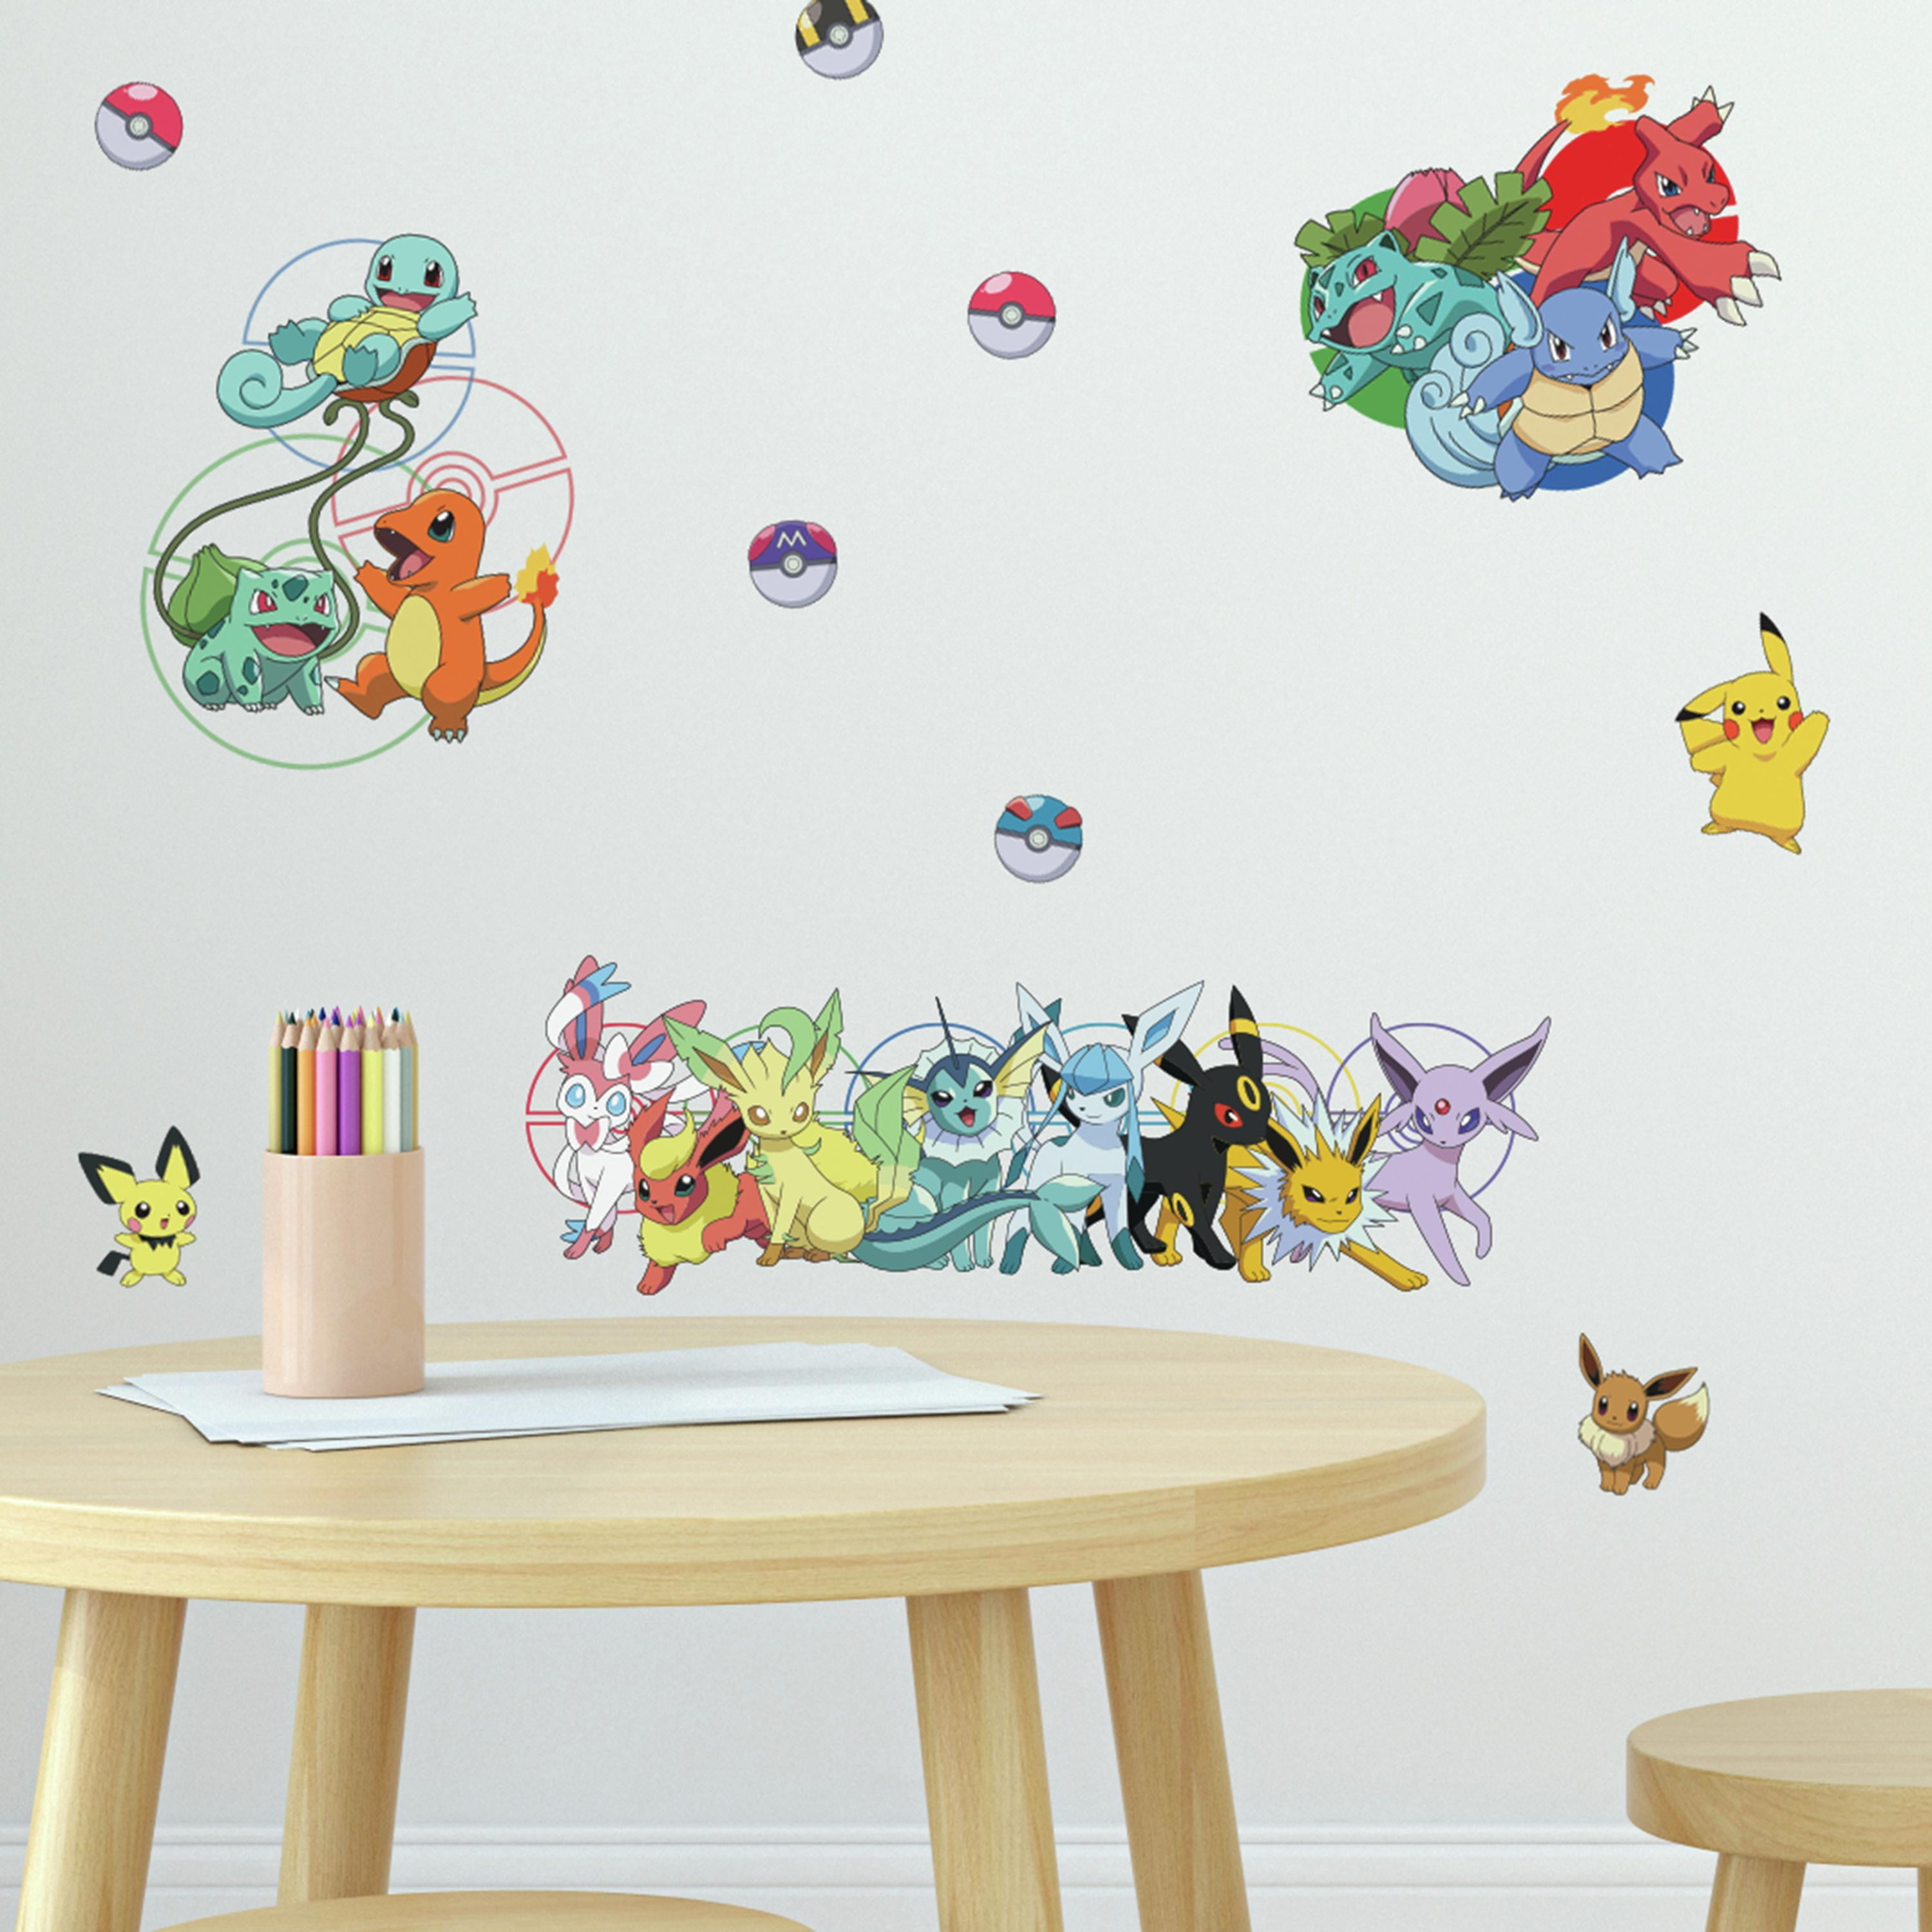 New Pikachu Pokemon Nursery Art Decal DIY Cute Animal PVC Wall Sticker For Kids